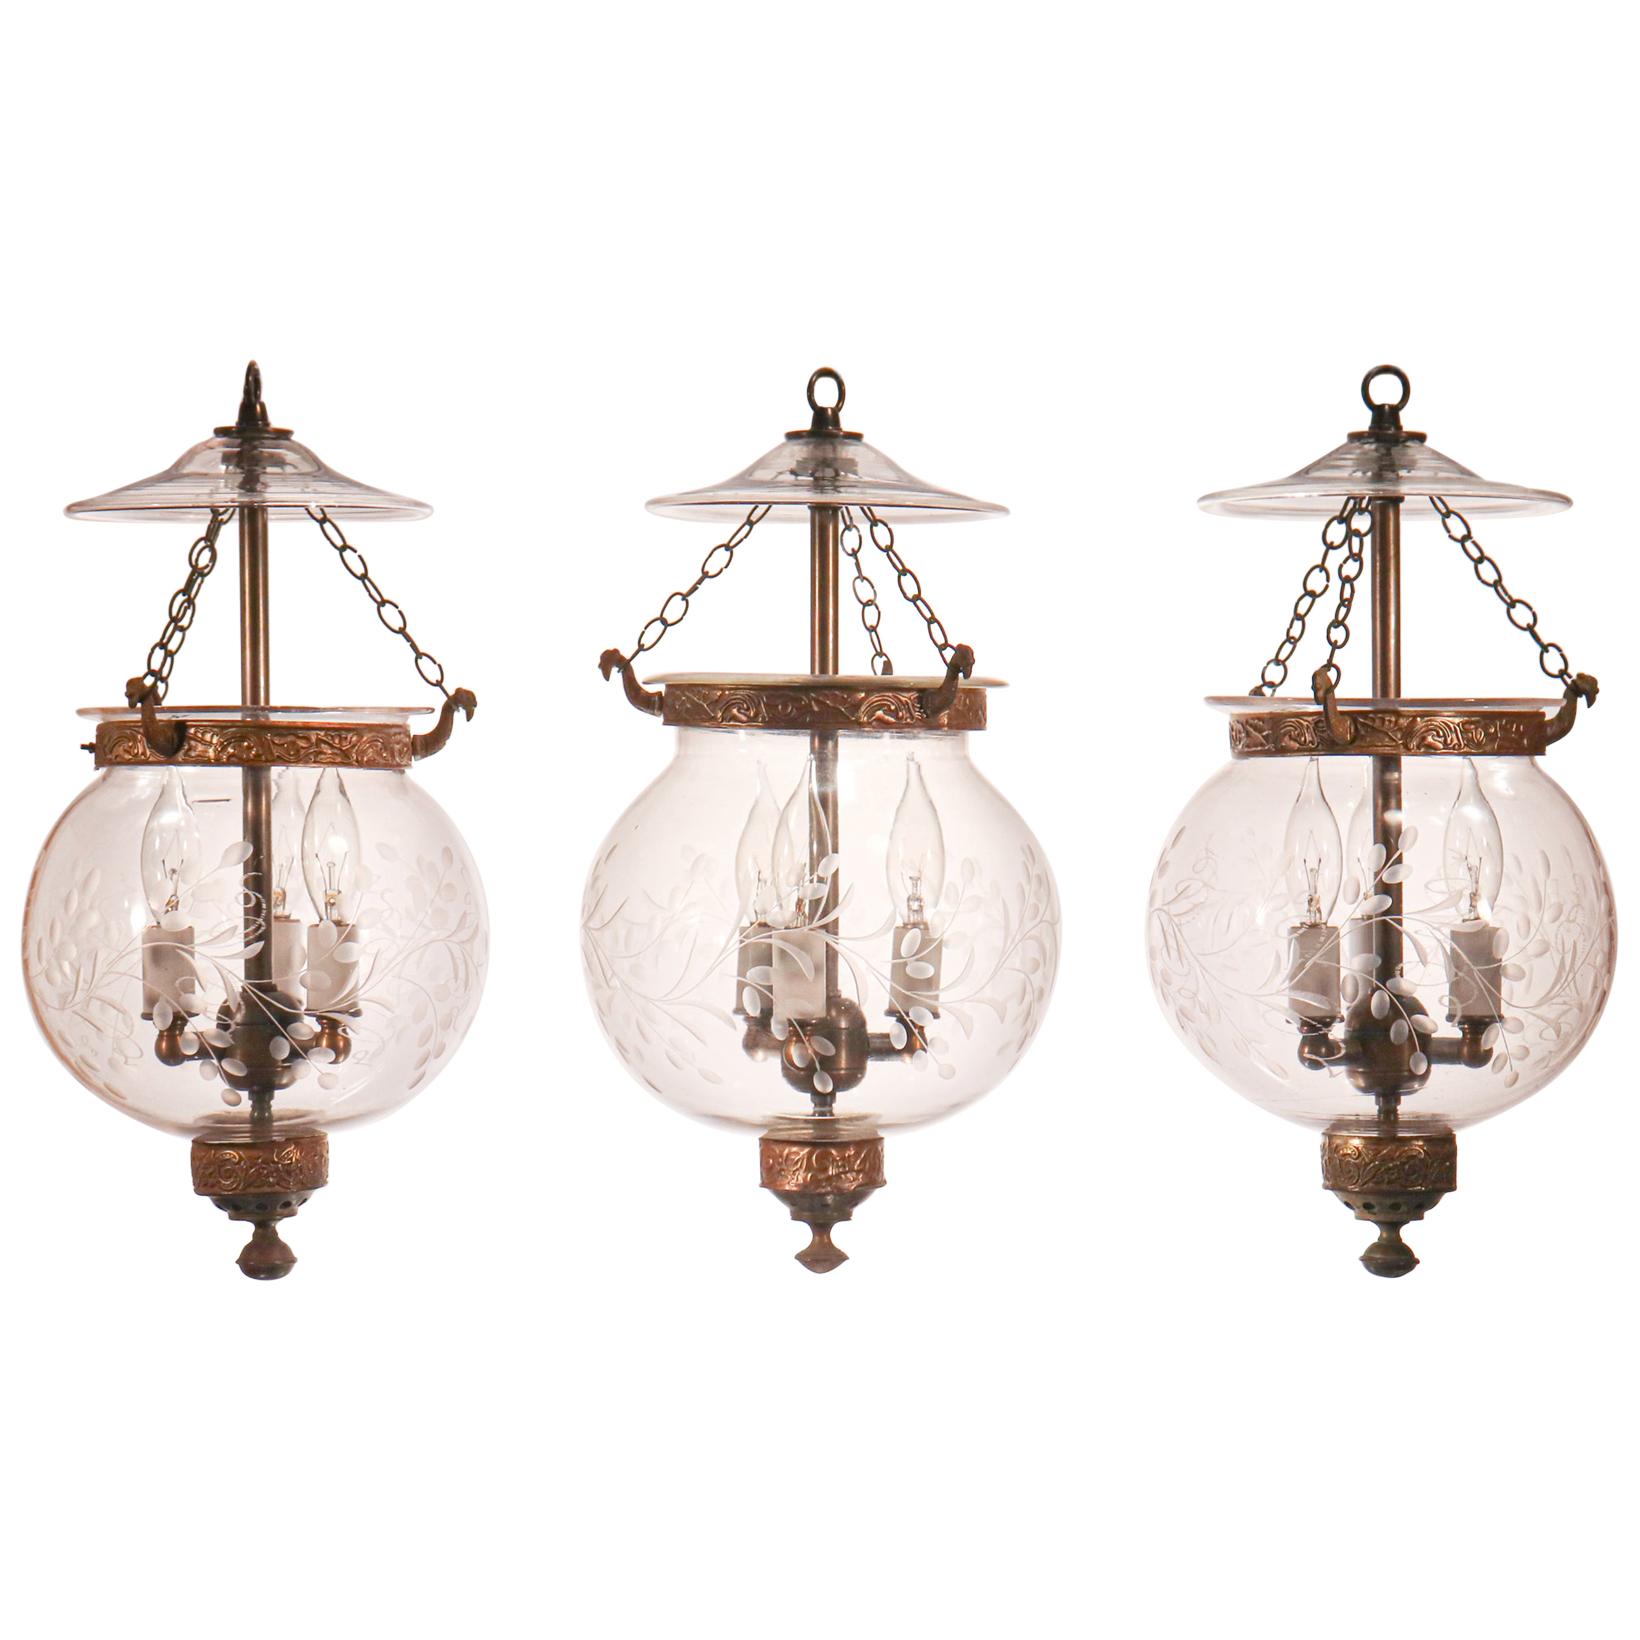 Set of Antique Globe Bell Jar Lanterns with Vine Etching